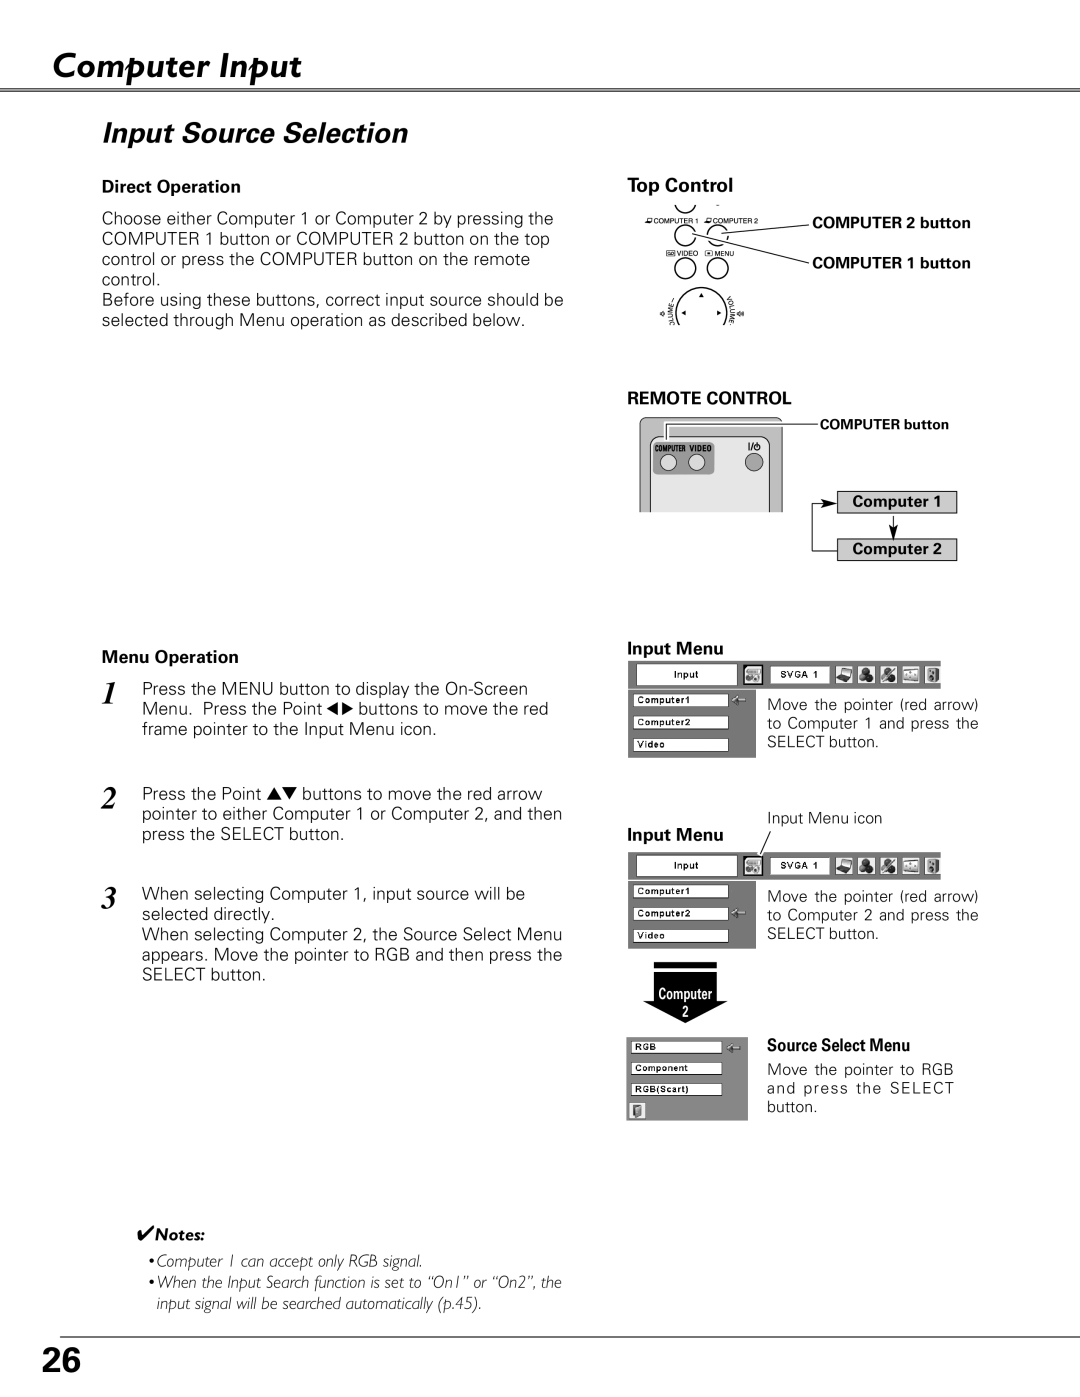 Eiki LC-XB41 Computer Input, Input Source Selection, Direct Operation, Menu Operation, Remote Control, Input Menu 